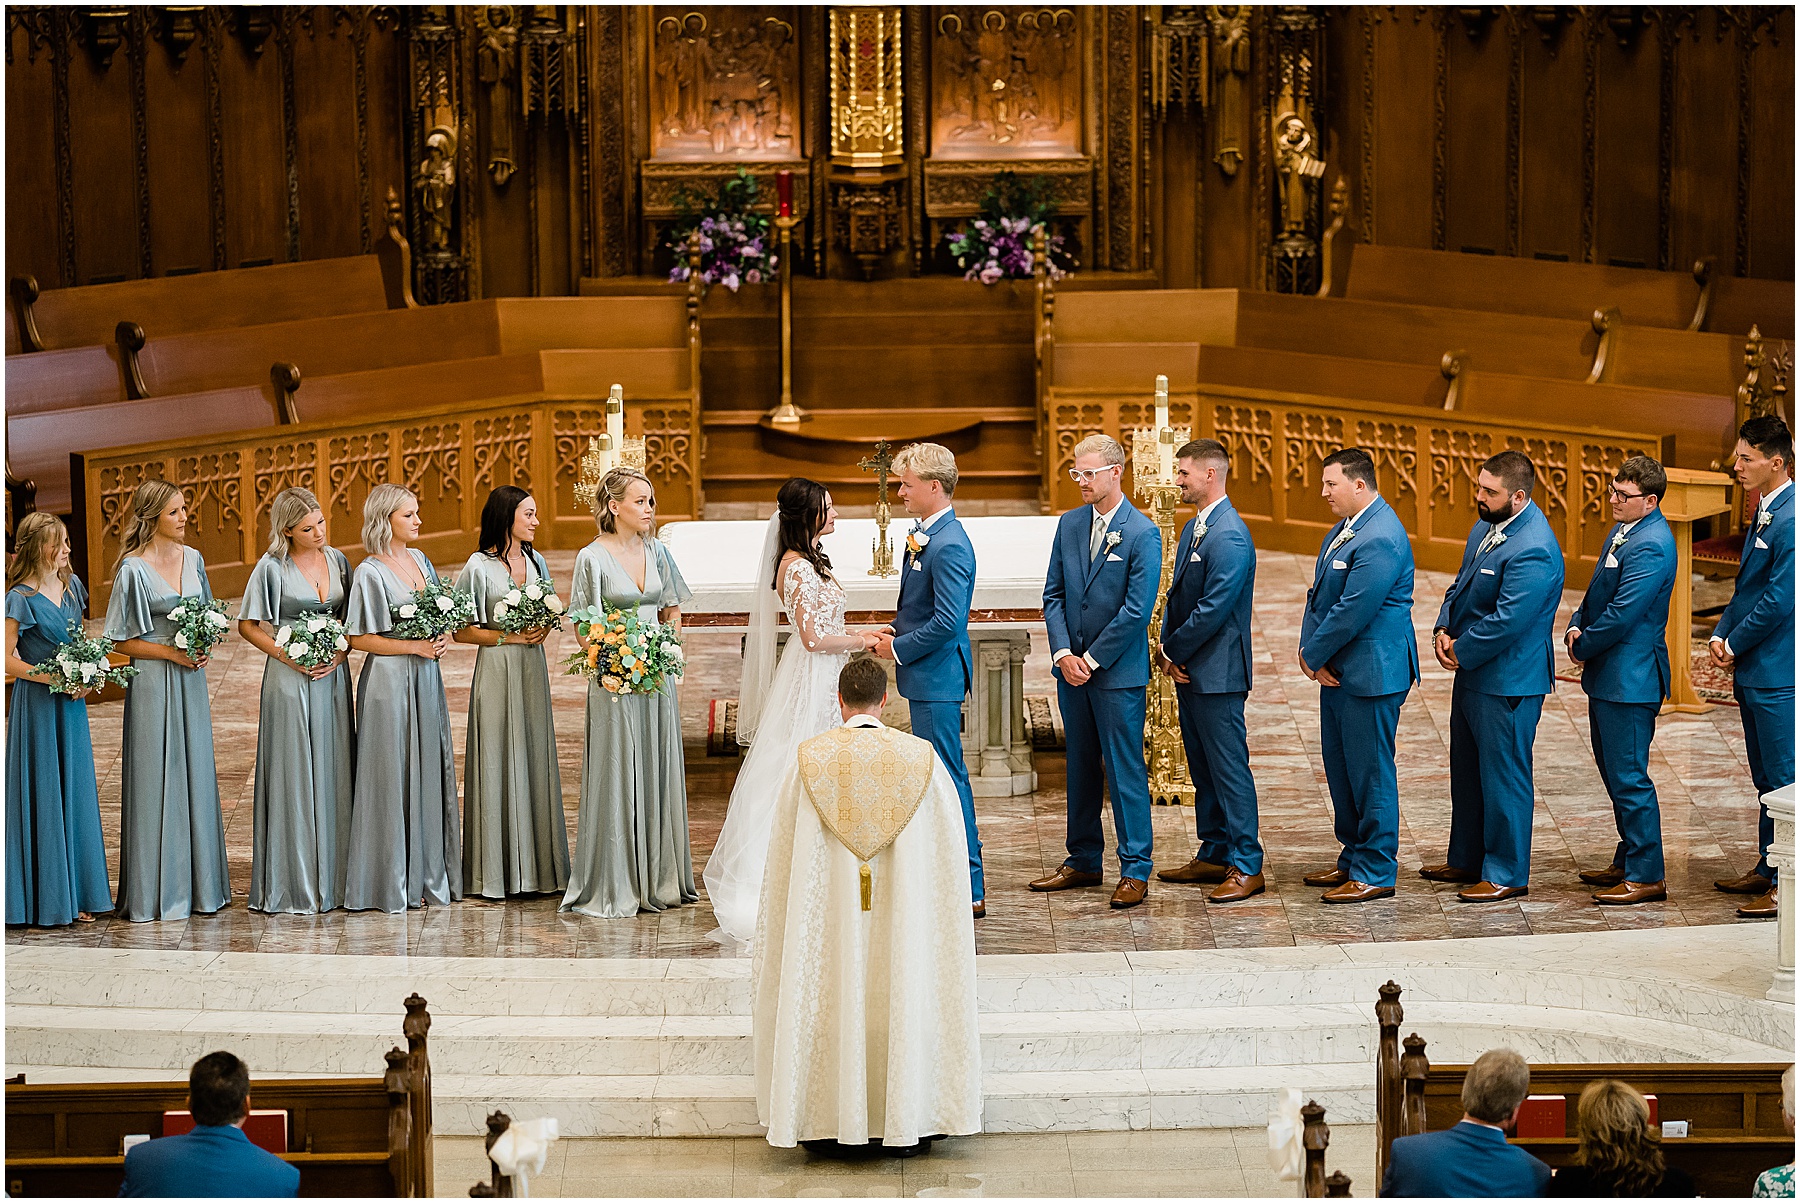 Fort Wayne wedding photographer captures bride and groom during wedding ceremony